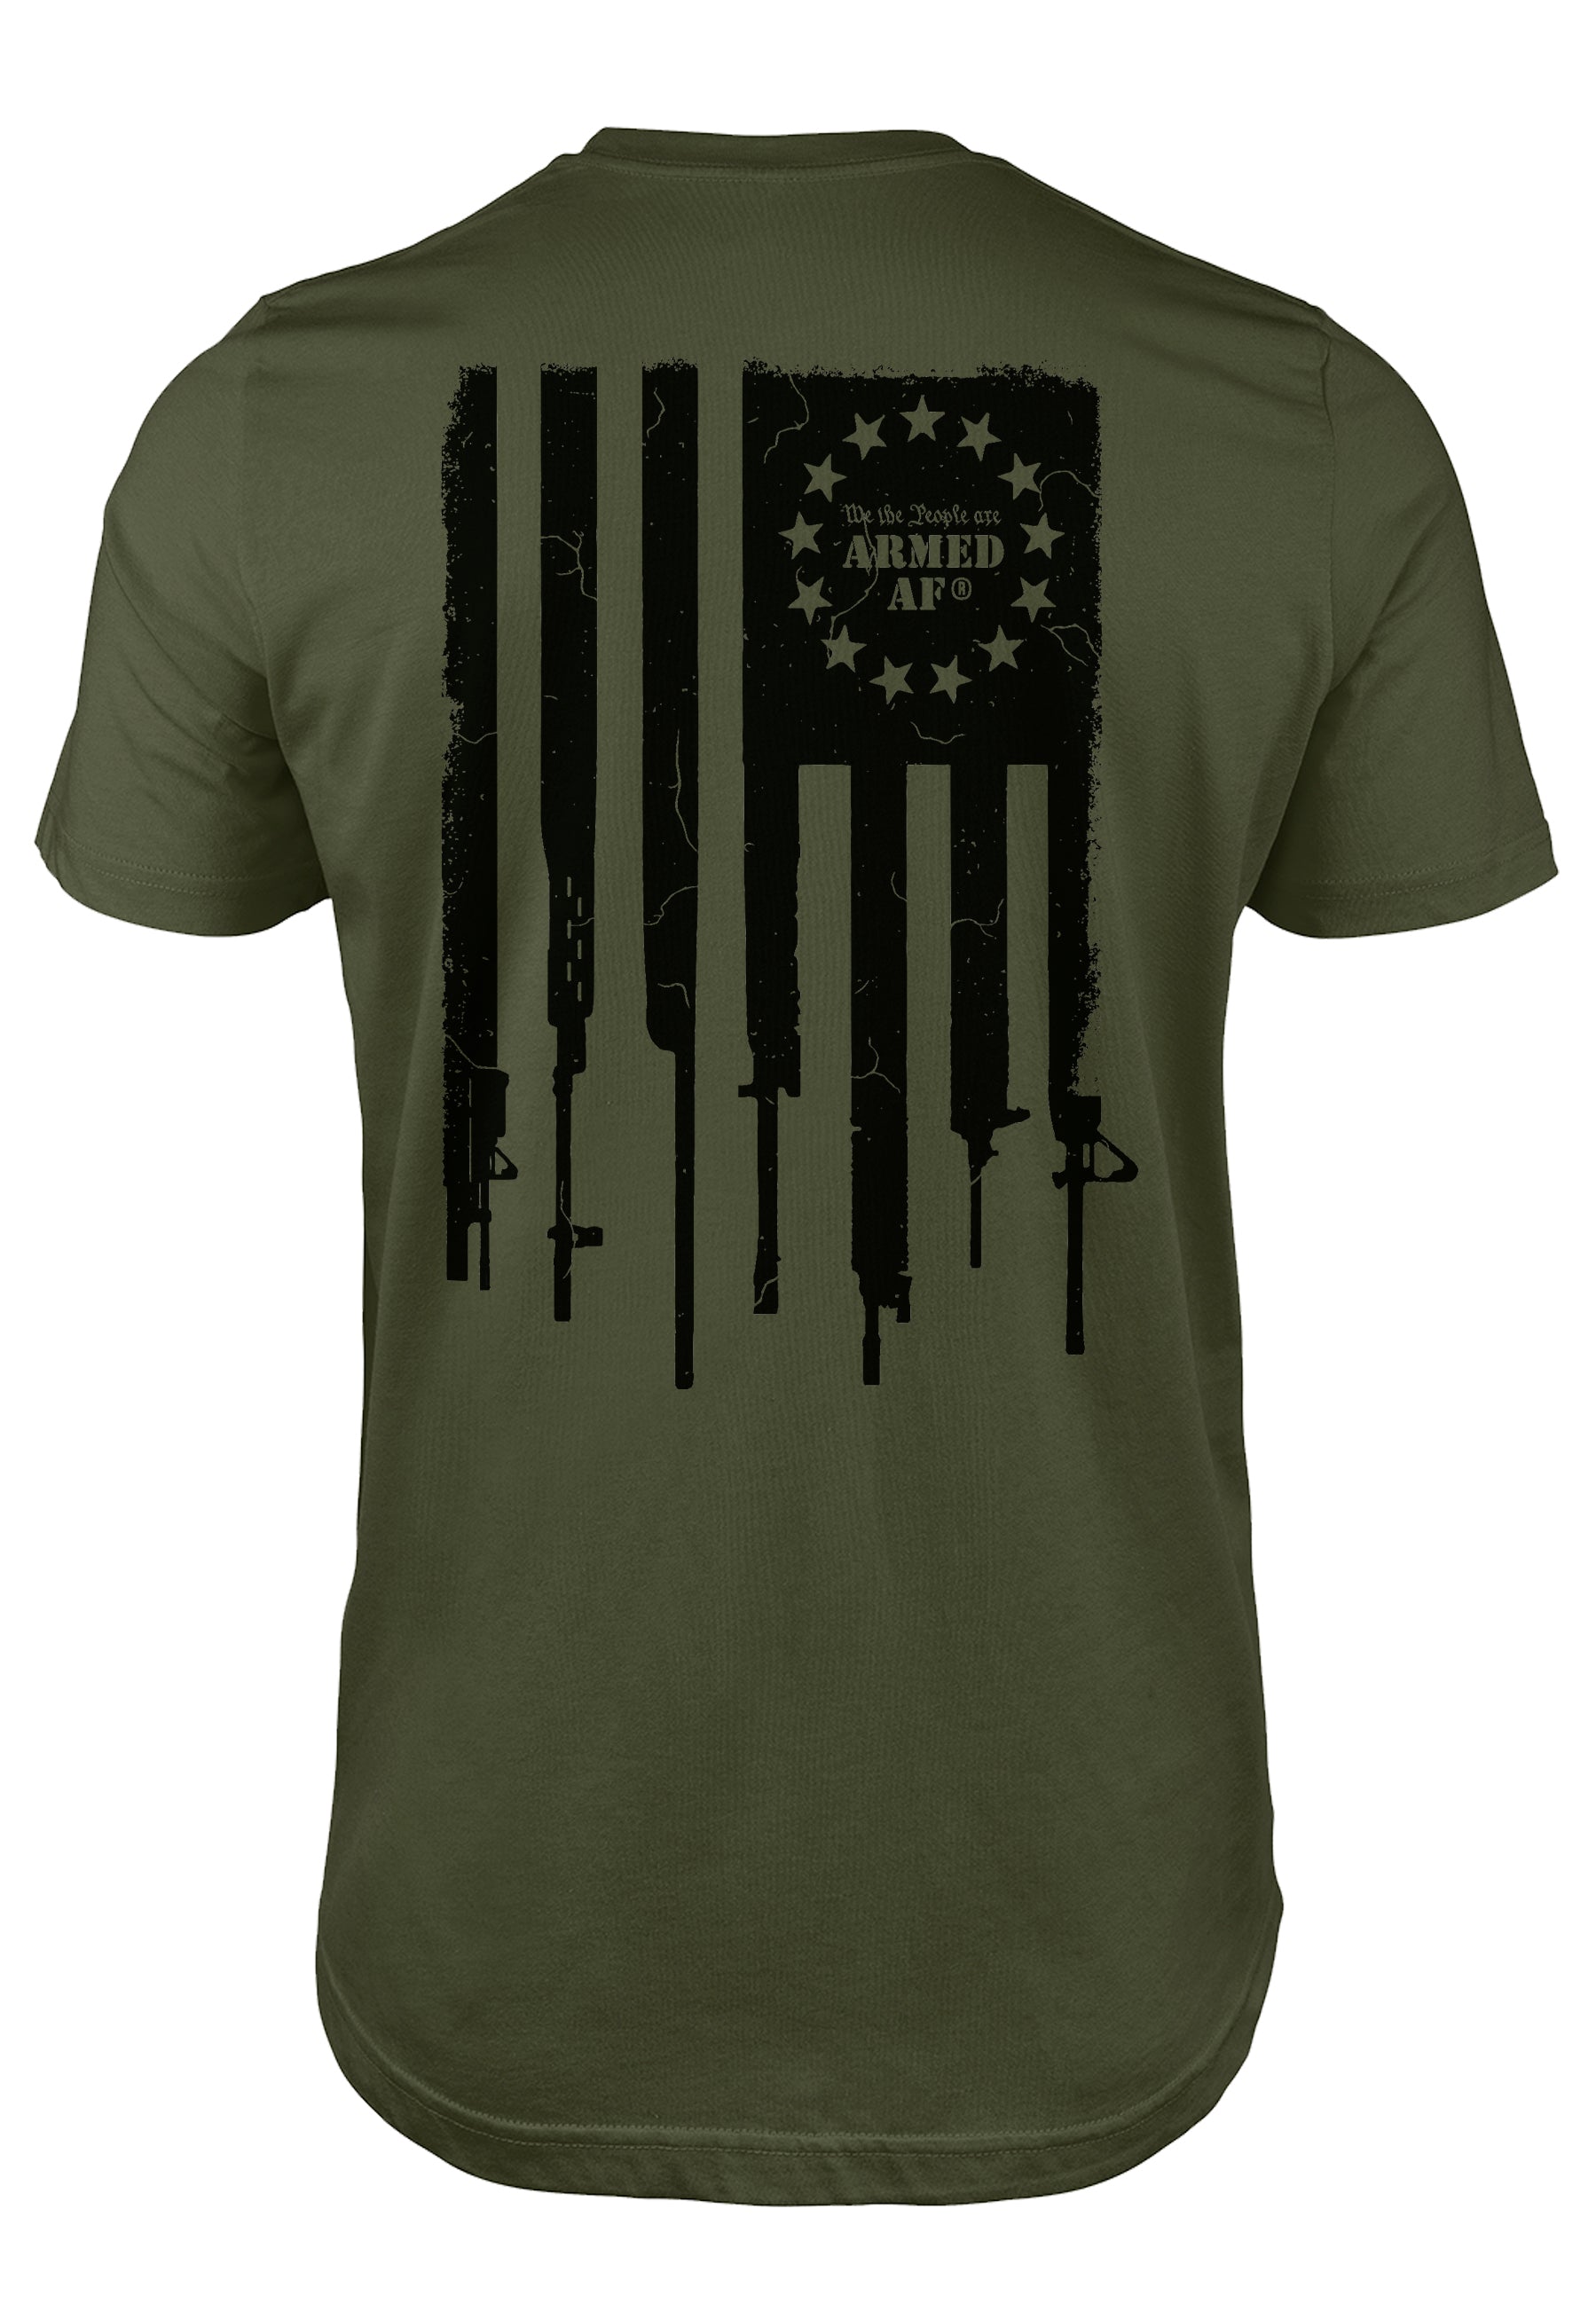 Second amendment t-shirt with american flag made of guns